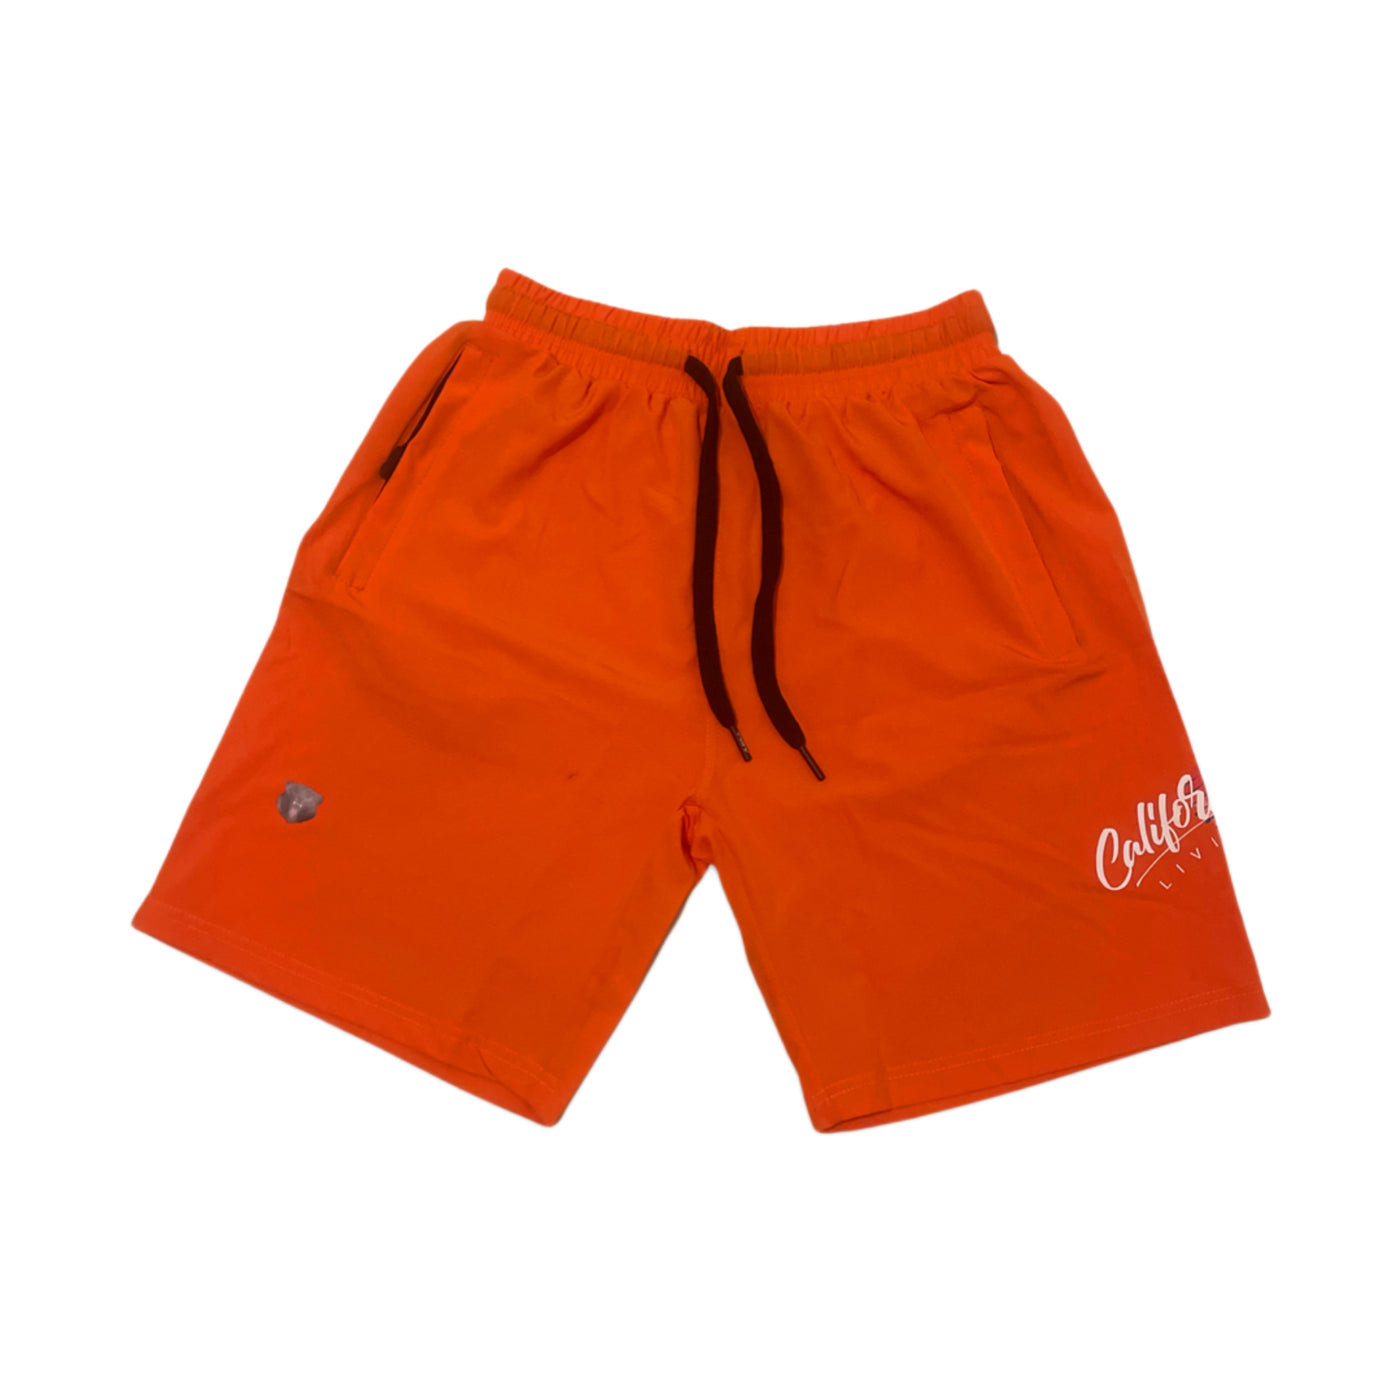 California Living shorts in sunset orange